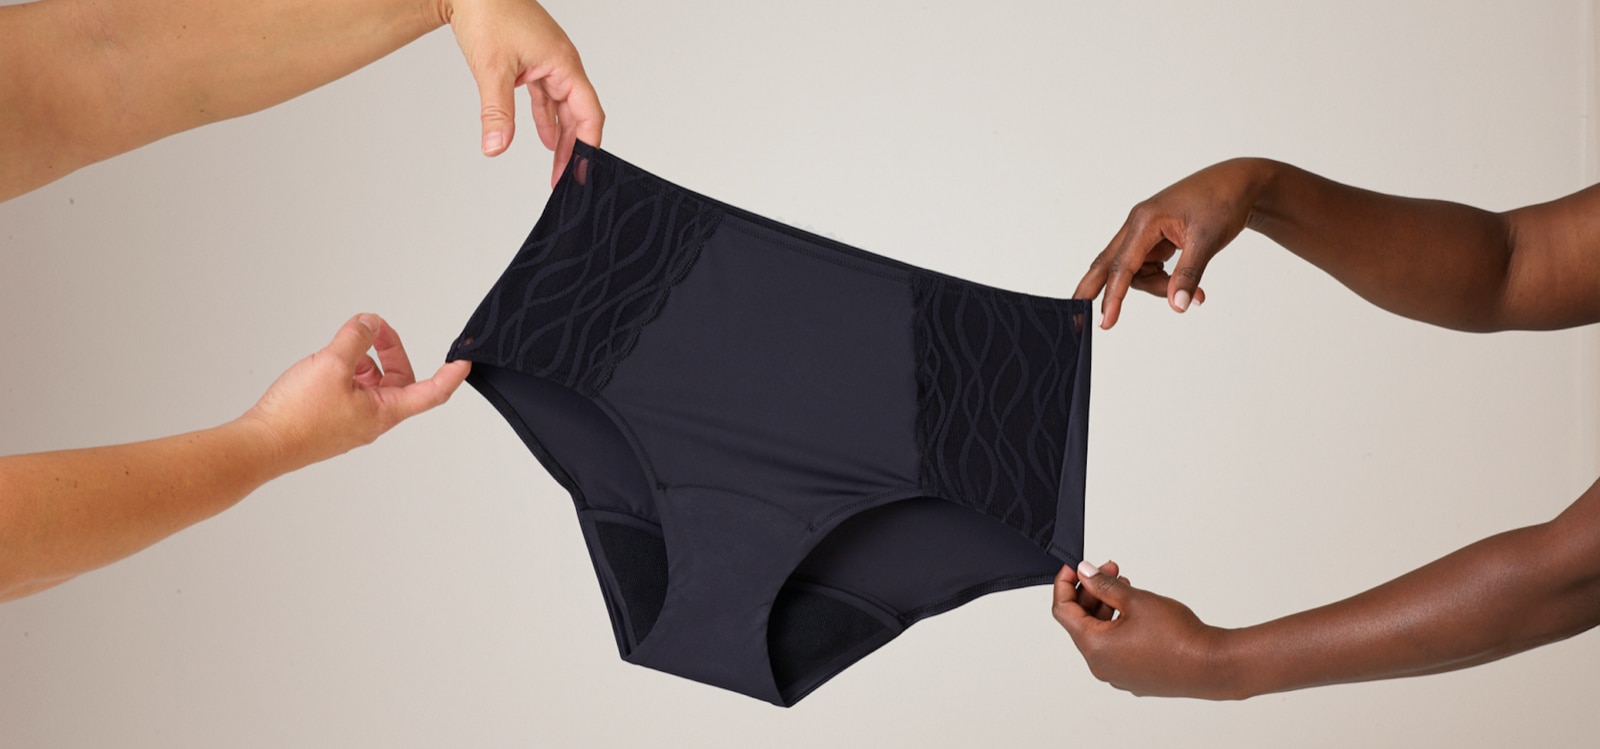 ASDA UNISEX Discreet Underwear Incontinence Pants Pants Large